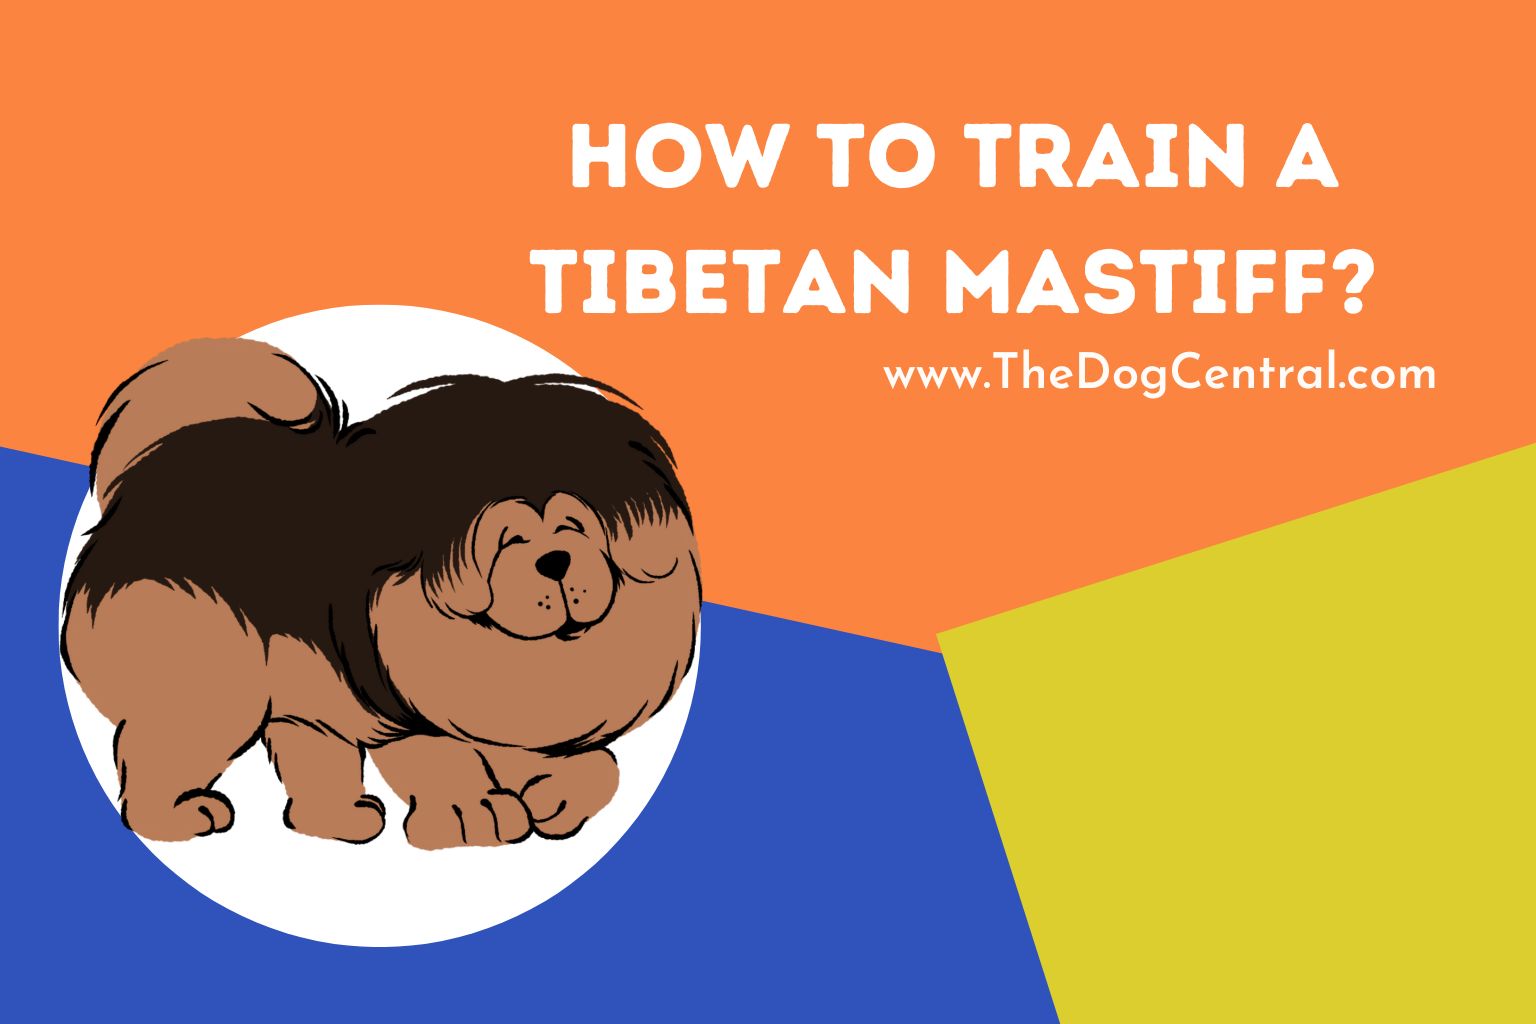 How to Train a Tibetan Mastiff